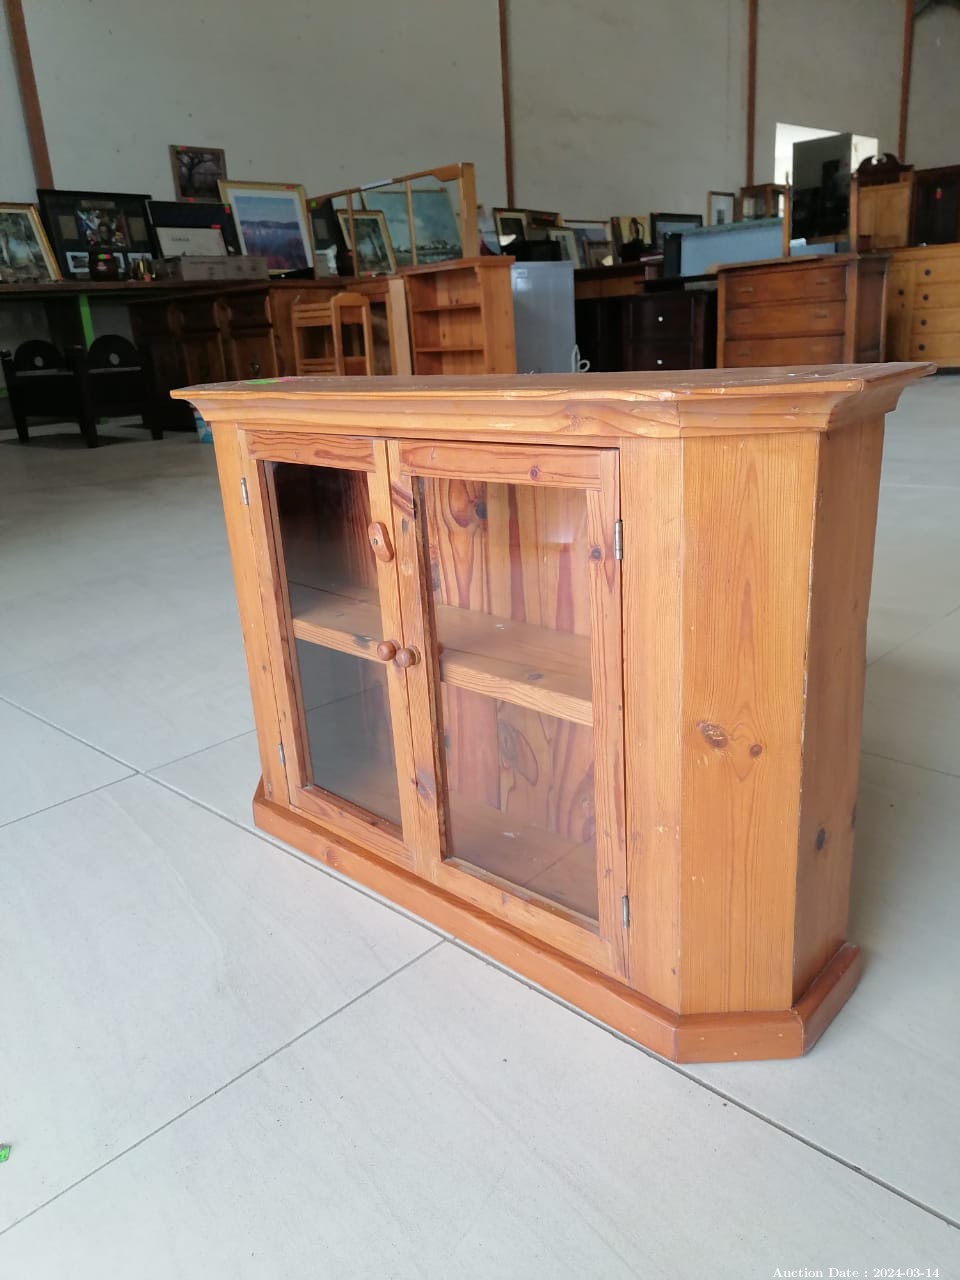 Lot 5884 - Rustic Pine Shelving Cabinet